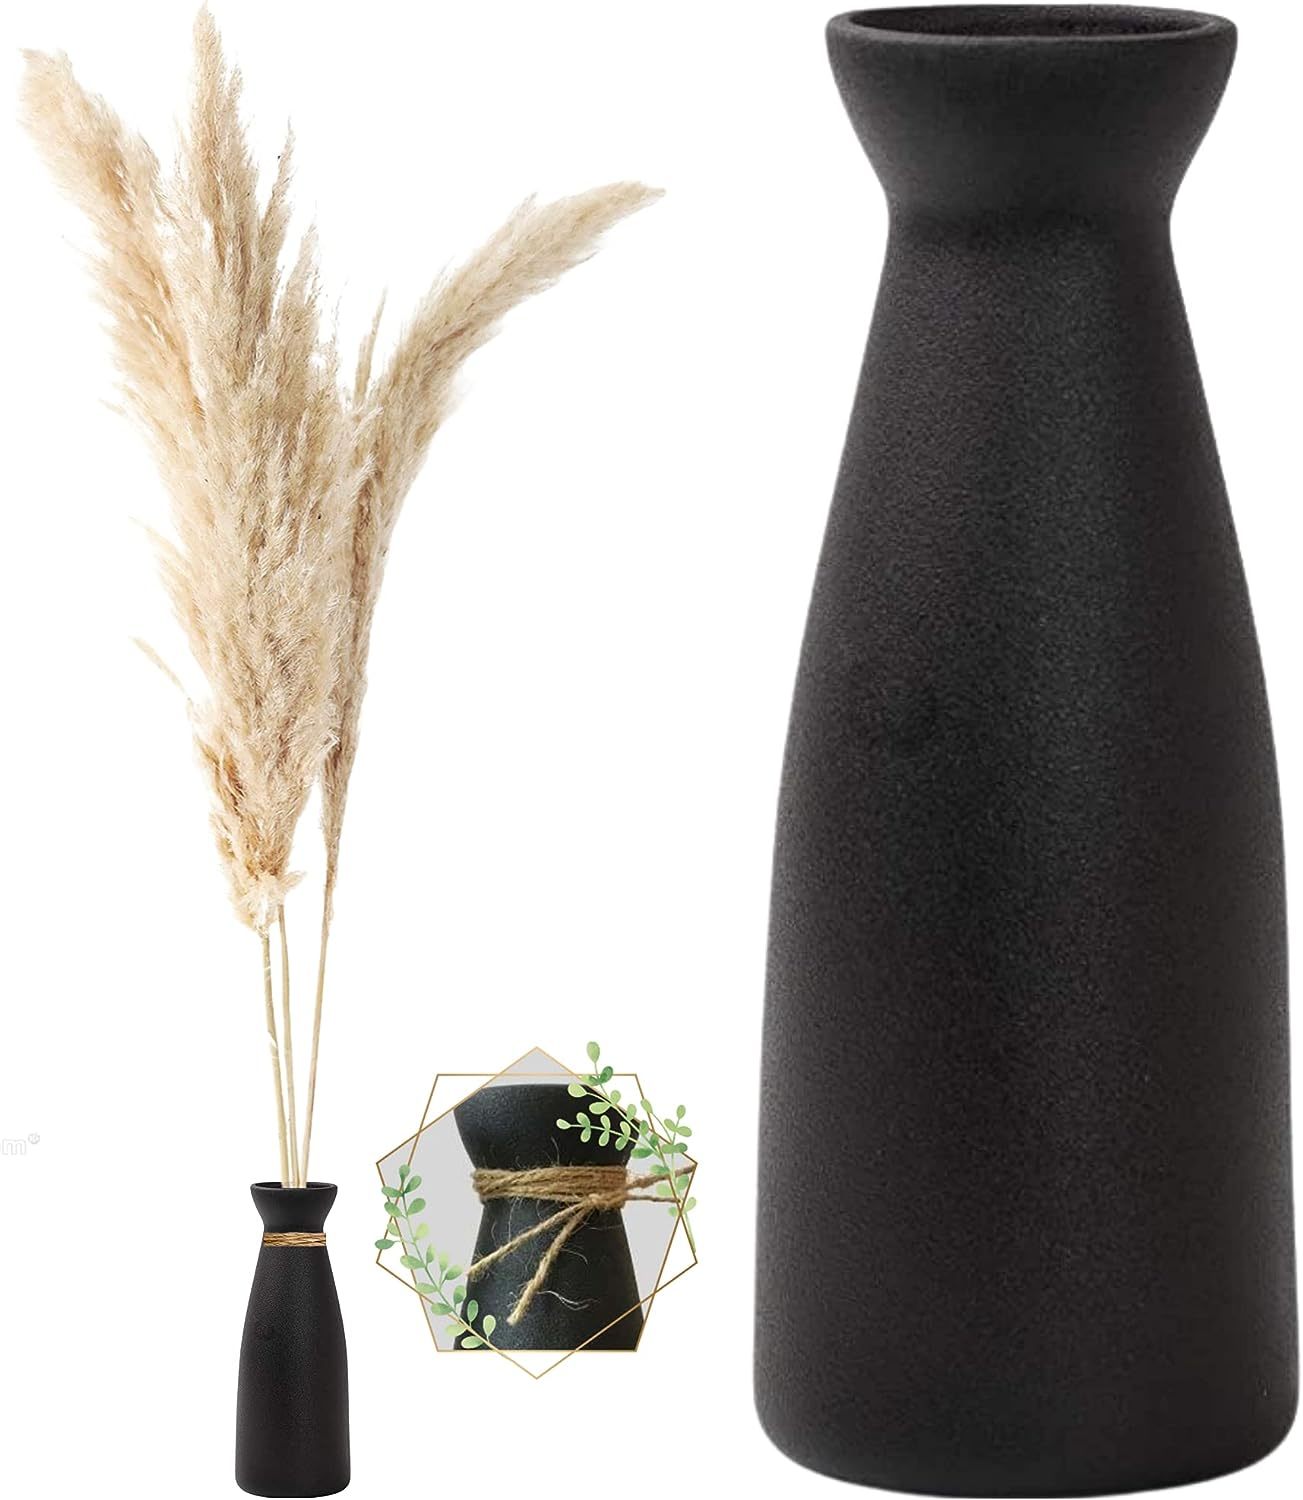 Primary image for Modern Boho Home Decor Style, Wz Woodzia Black Ceramic Vase For Pampas Grass,, 2